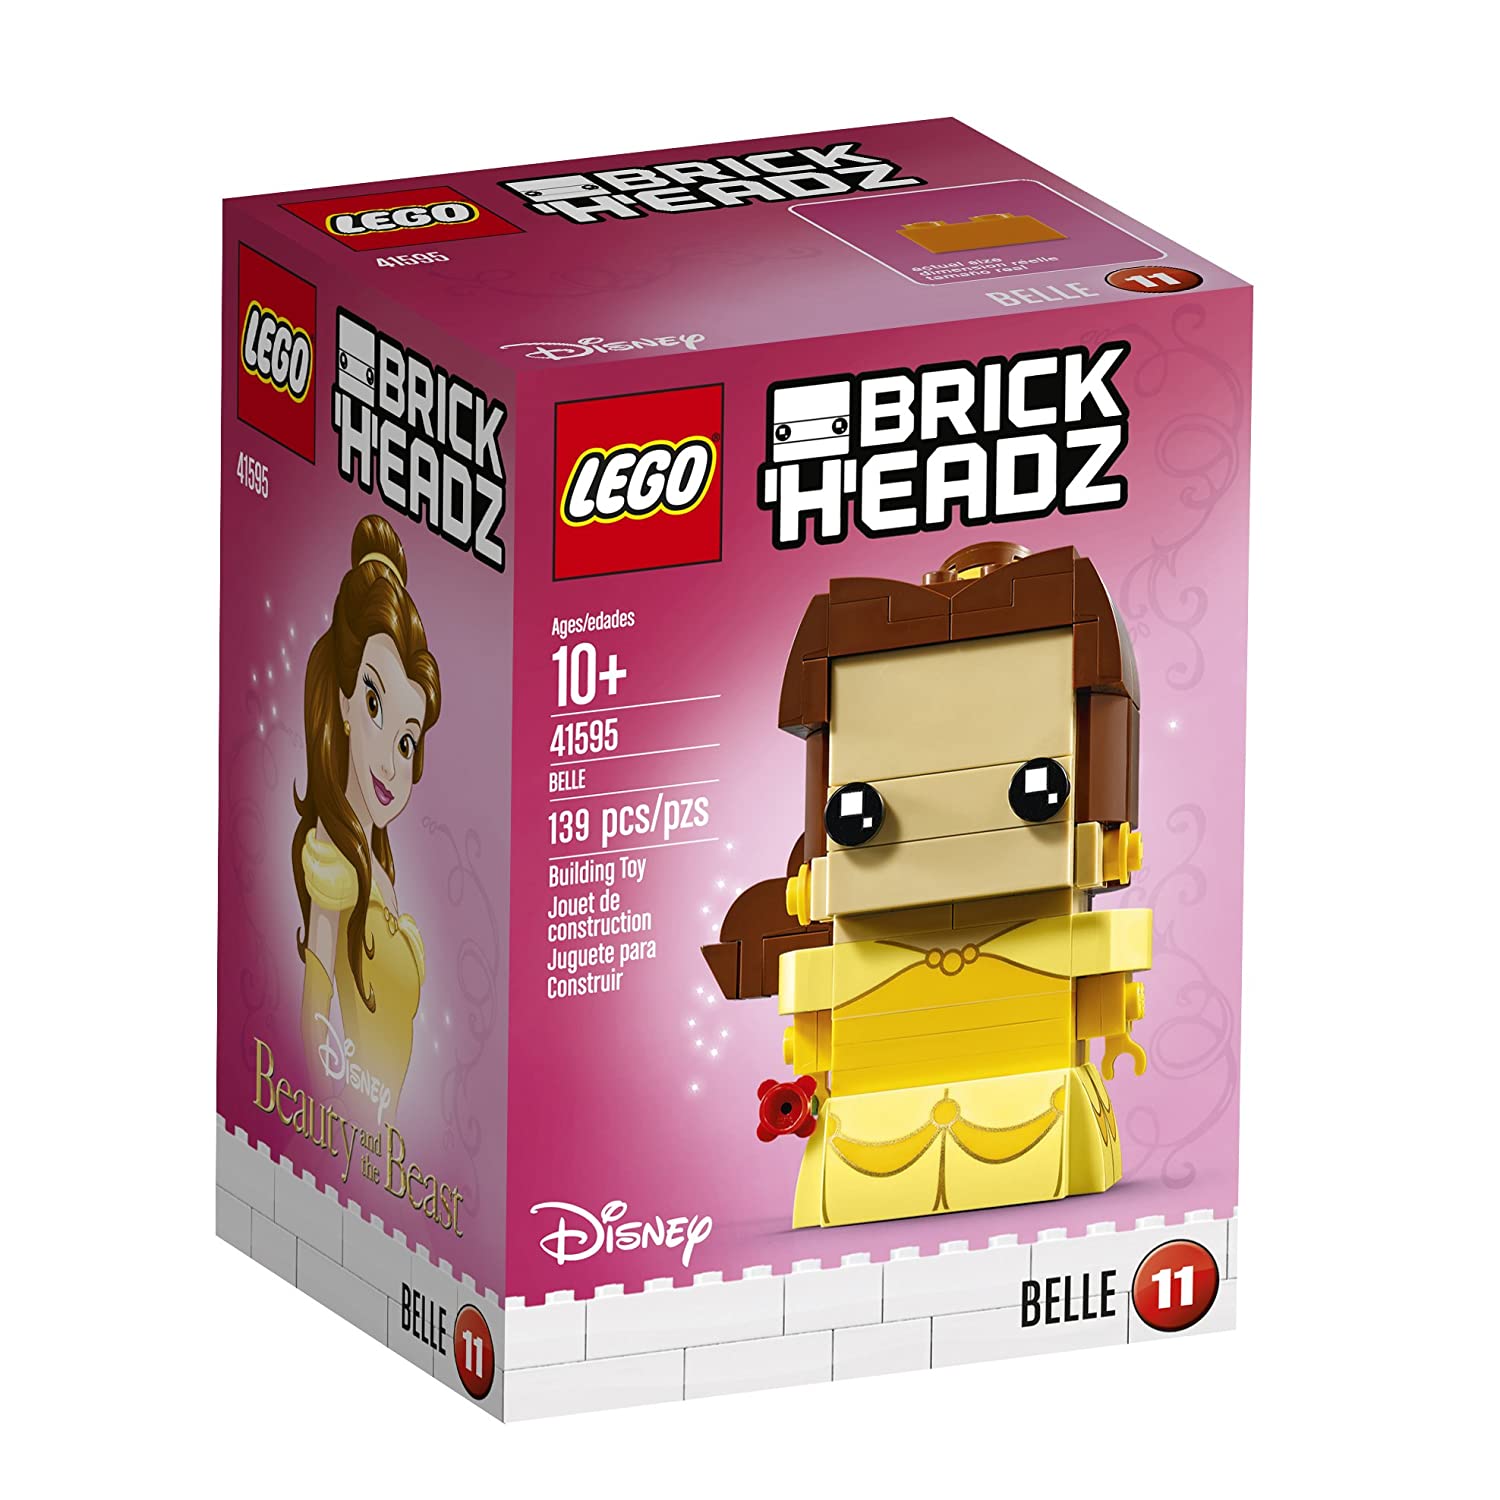 11 Best Lego Brickheadz 2022 - Buying Guide & Reviews 6